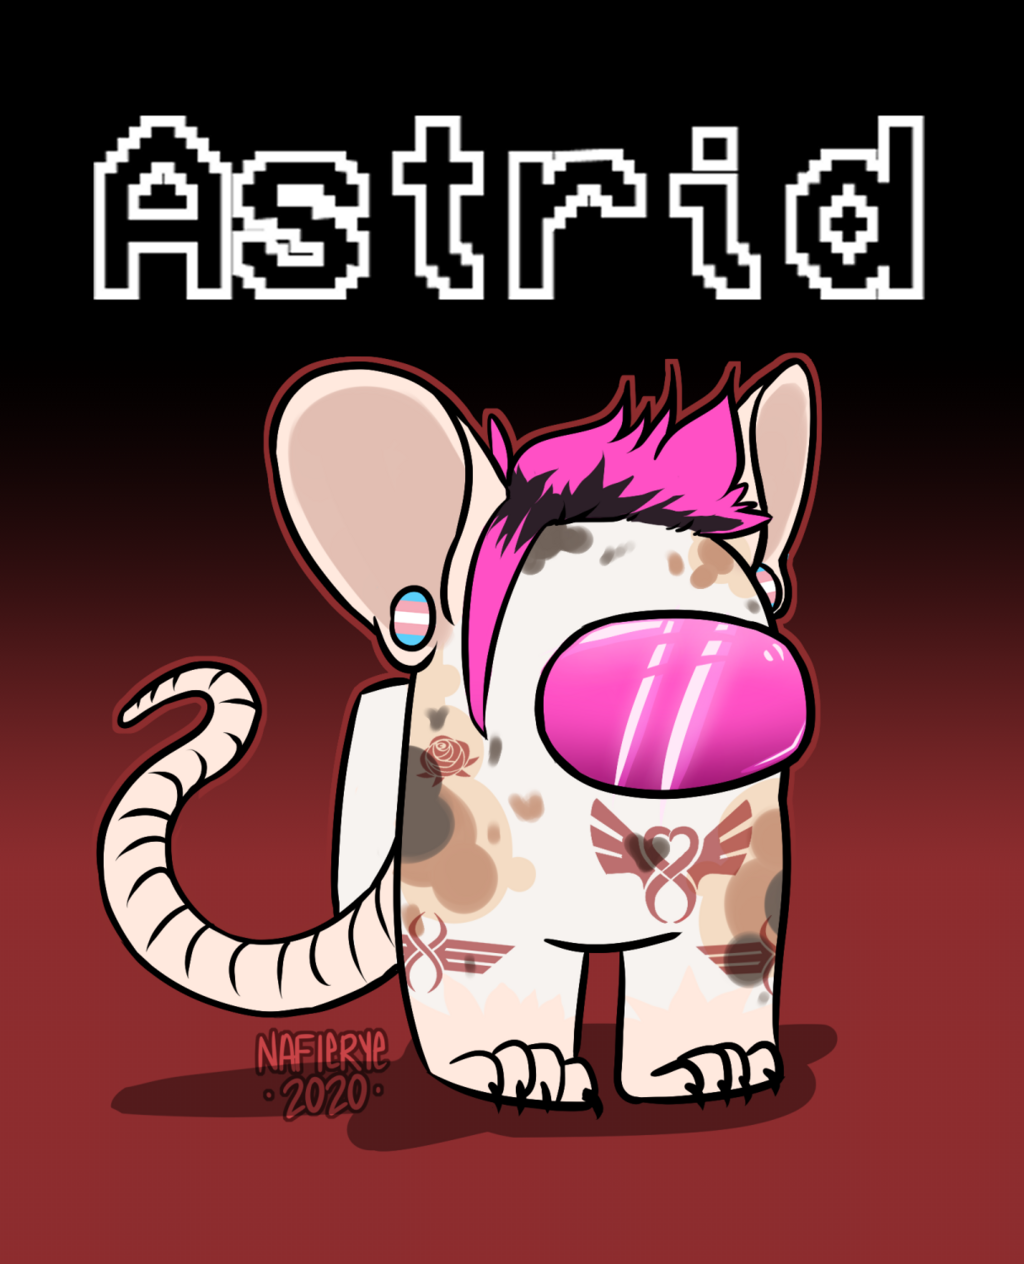 Astrid is Sus